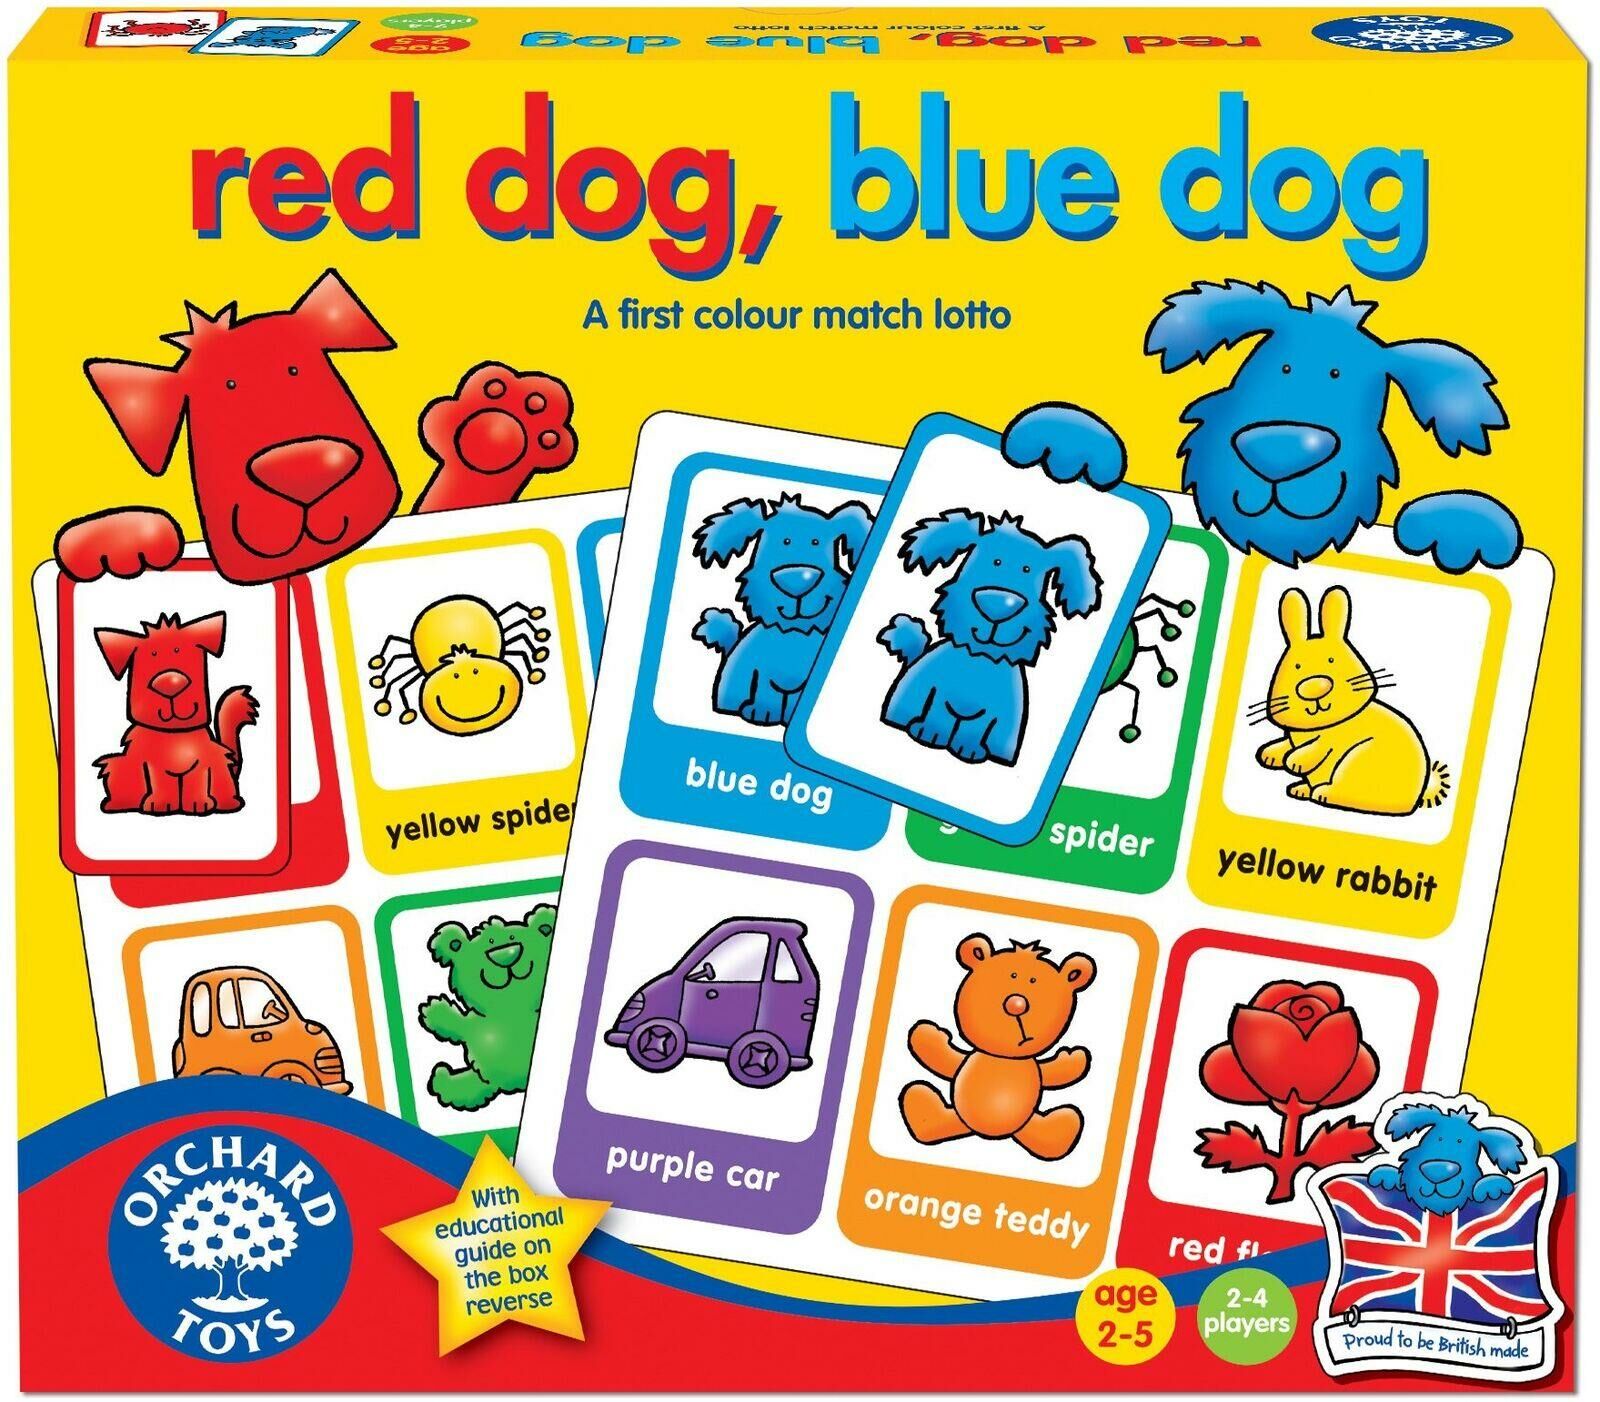 Orchard Red Dog Blue Dog Lotto Game 2 - 5 yaş